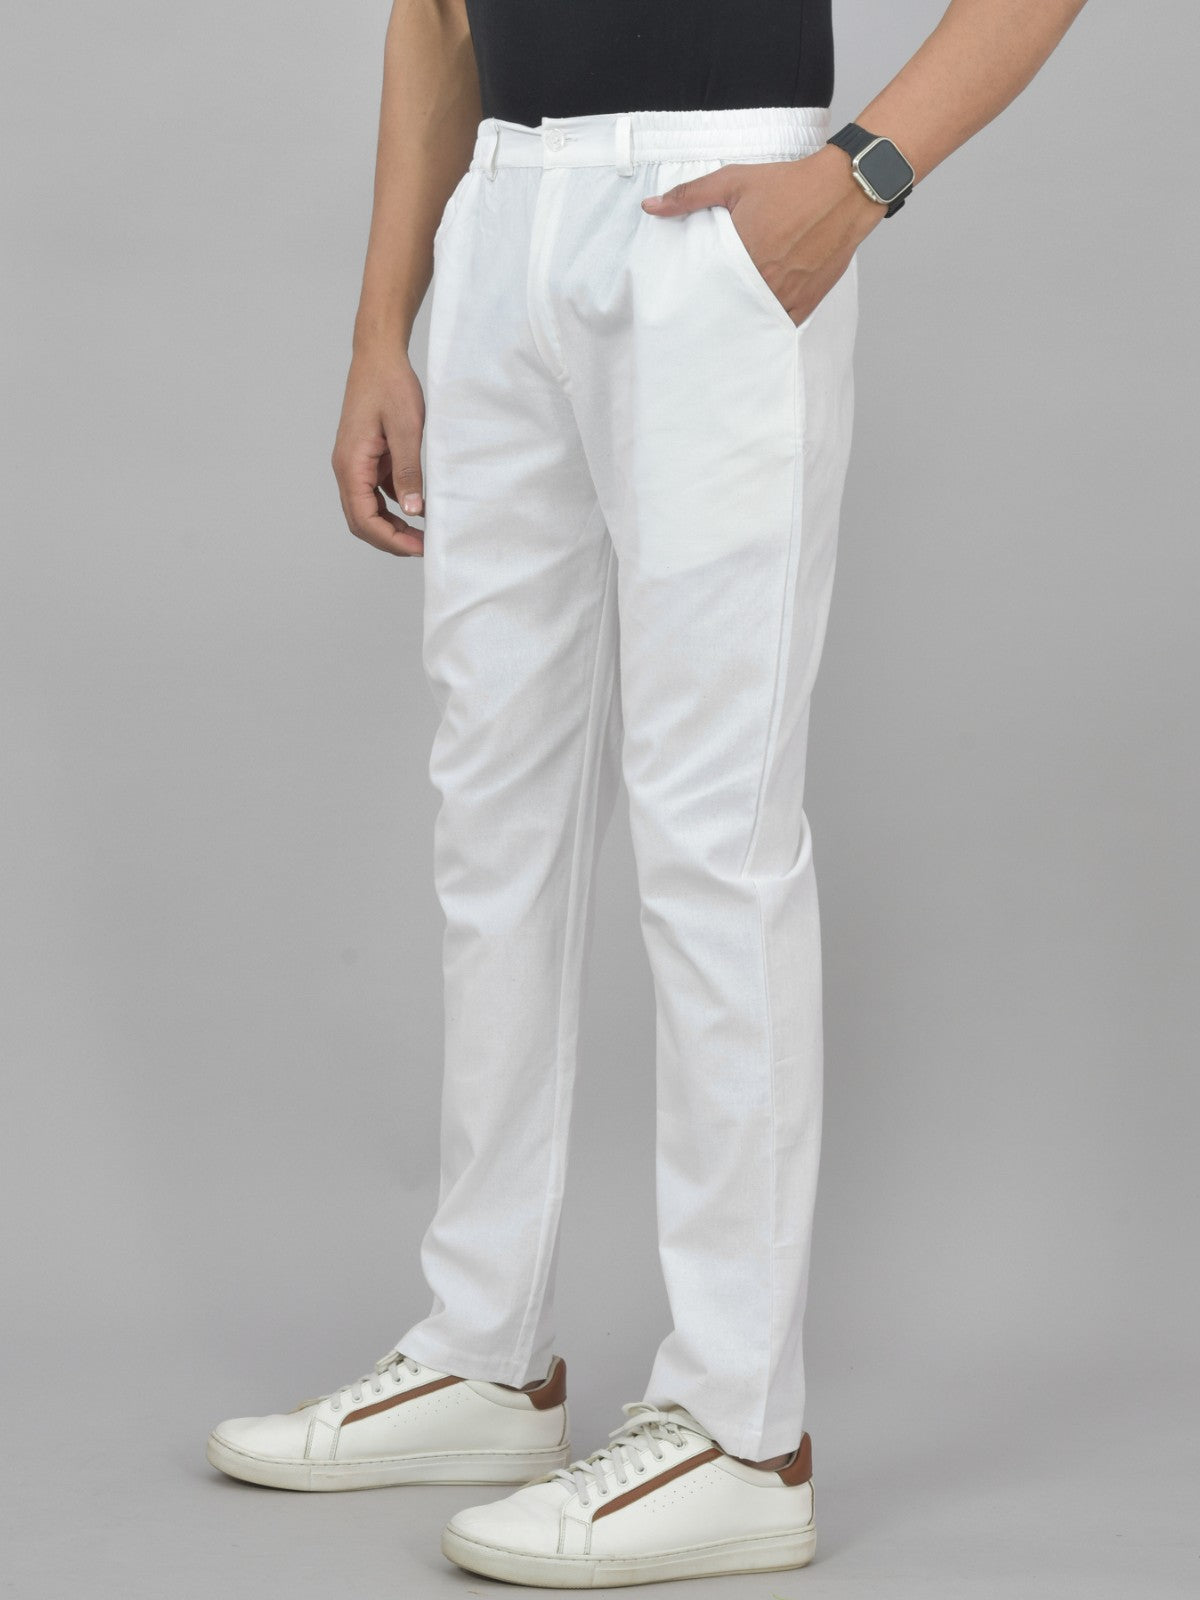 White Airy linen  Summer Cool Cotton Comfort Pants For Men